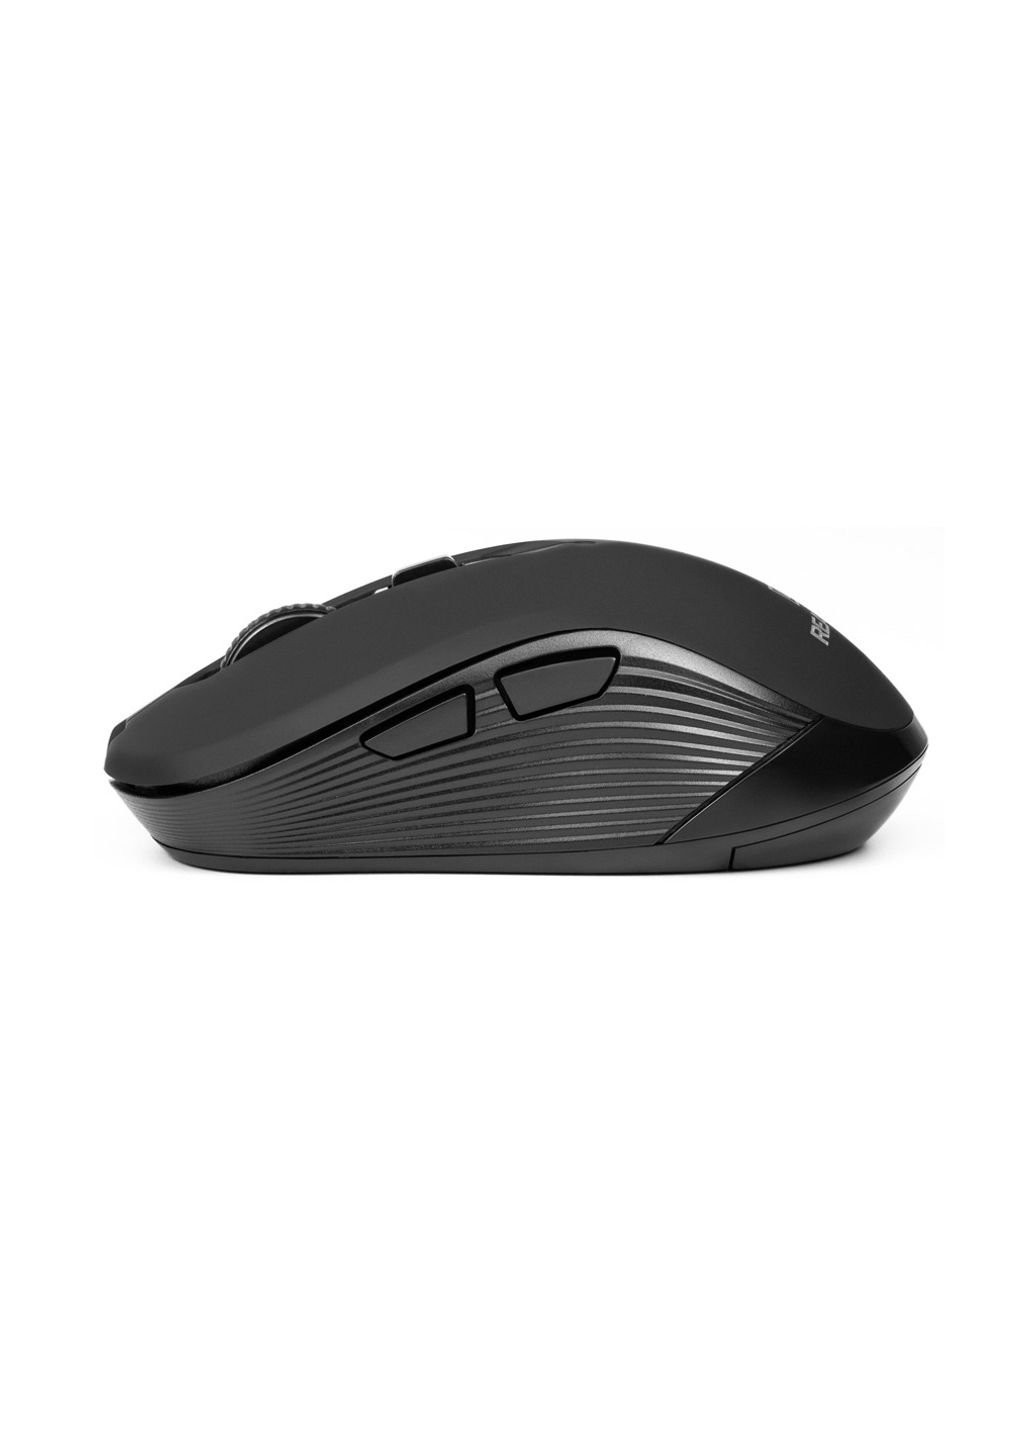 Мышка RM-330 Wireless Black Real-El (252634296)